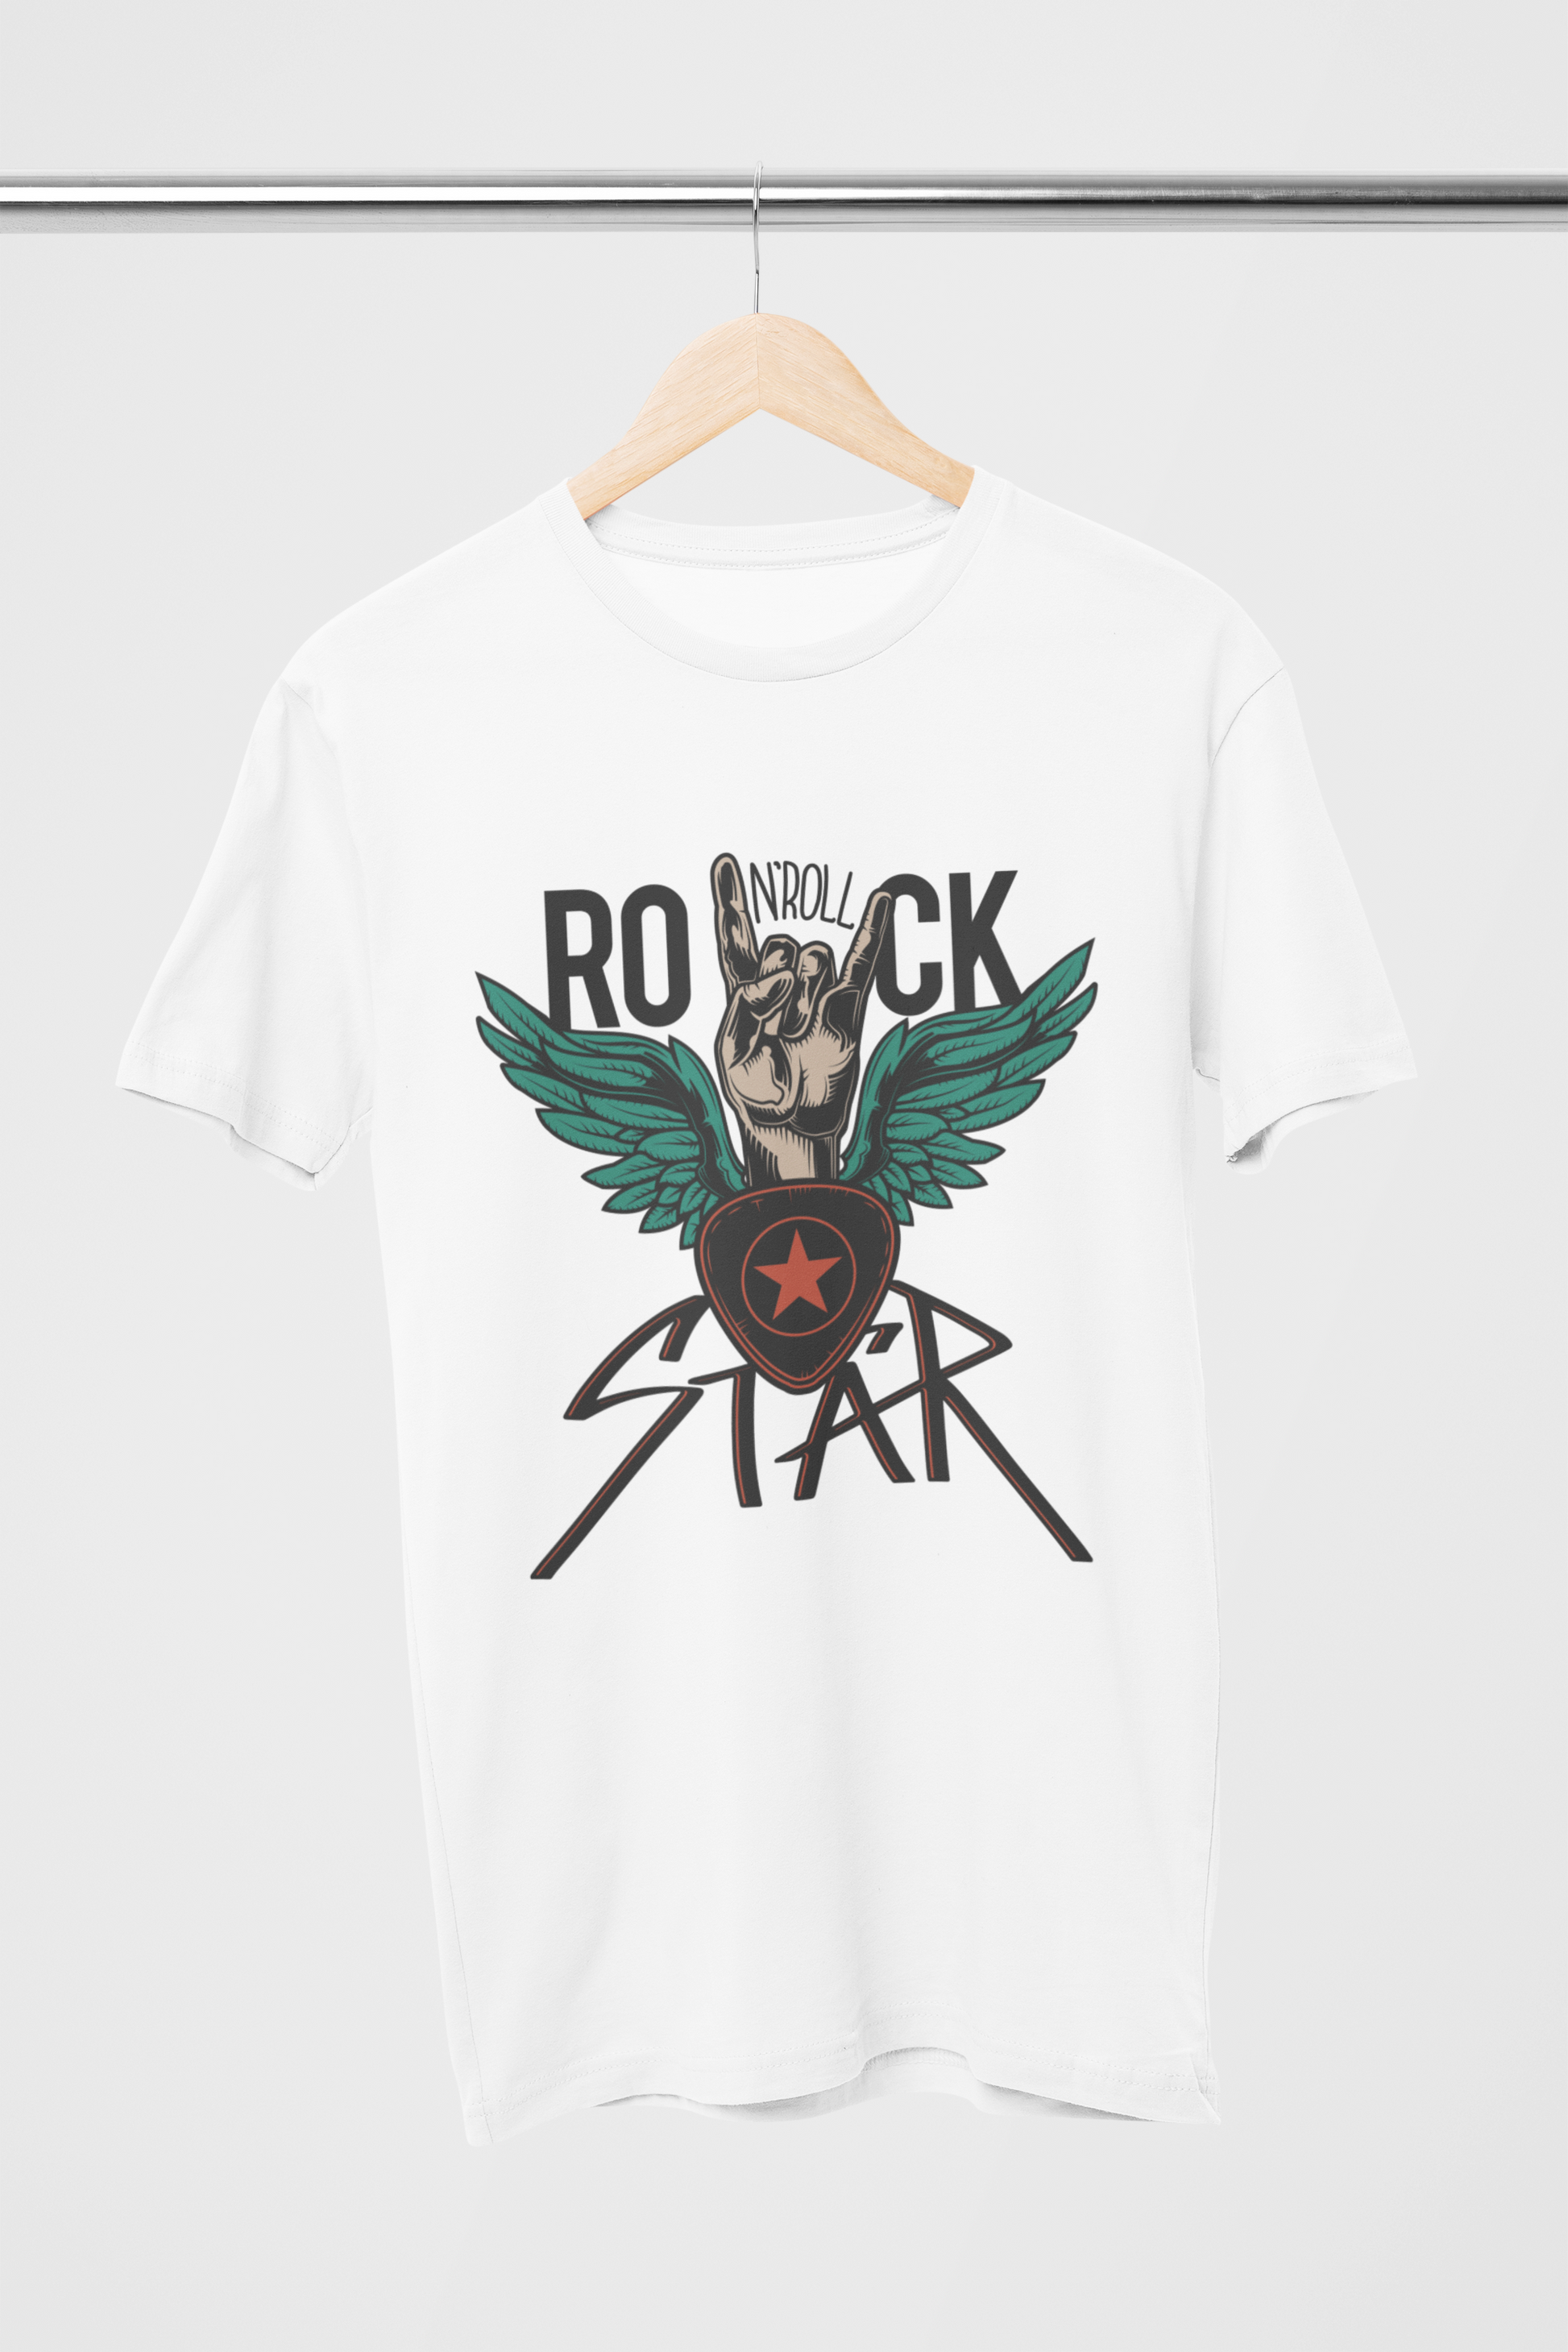 Rock N Roll Star Unisex White Cotton T-Shirt | DJ Paroma Collection | ATOM